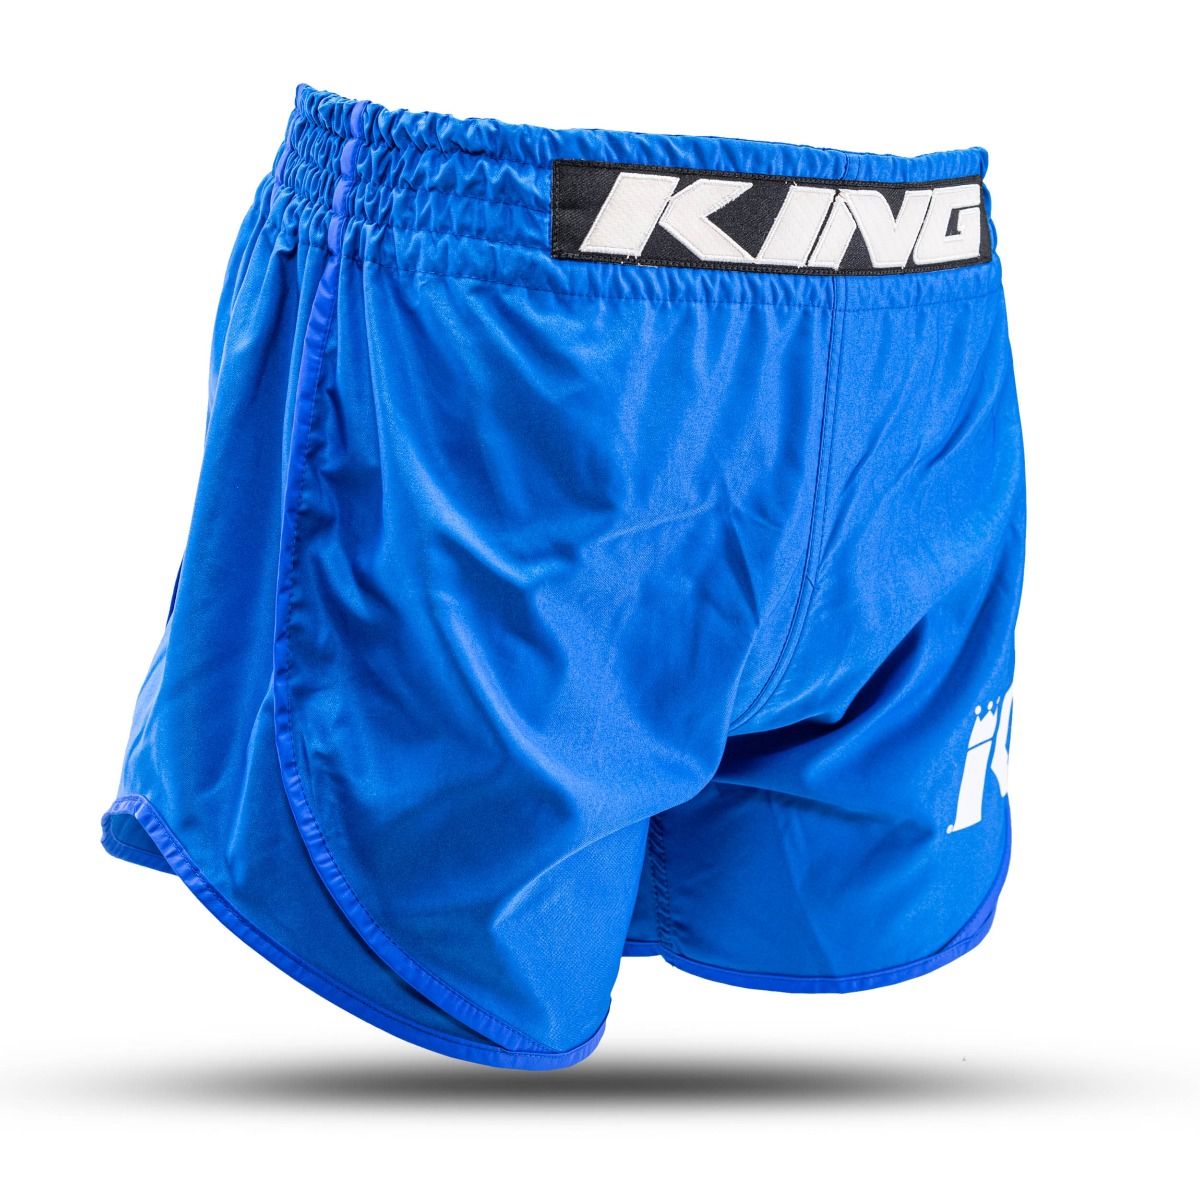 King - short - KPB/CLASSIC COBALT BLUE